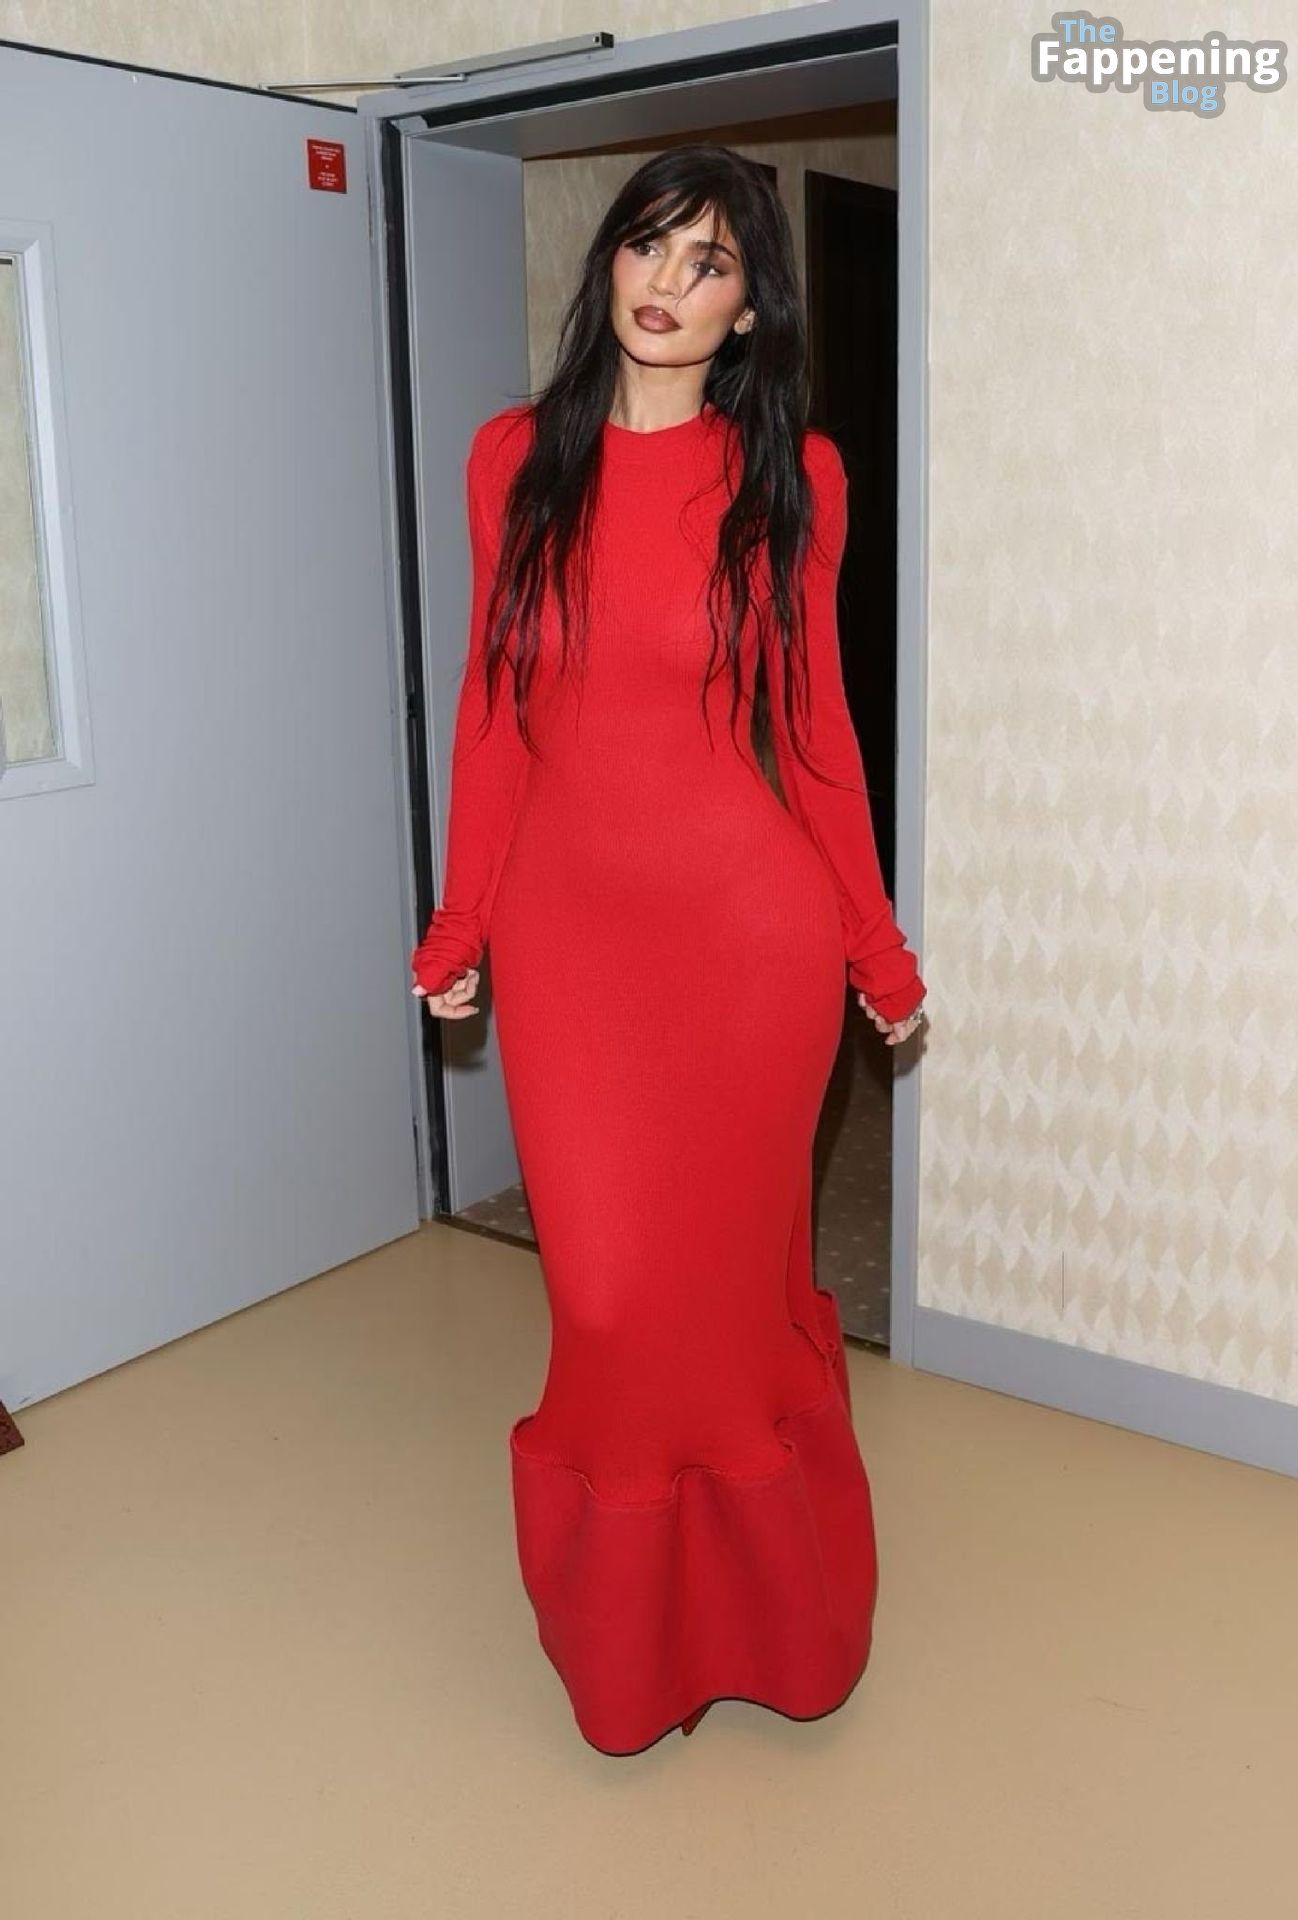 Kylie-Jenner-Sensational-Curves-Boobs-Paris-Fashion-Week-26-thefappeningblog.com_.jpg